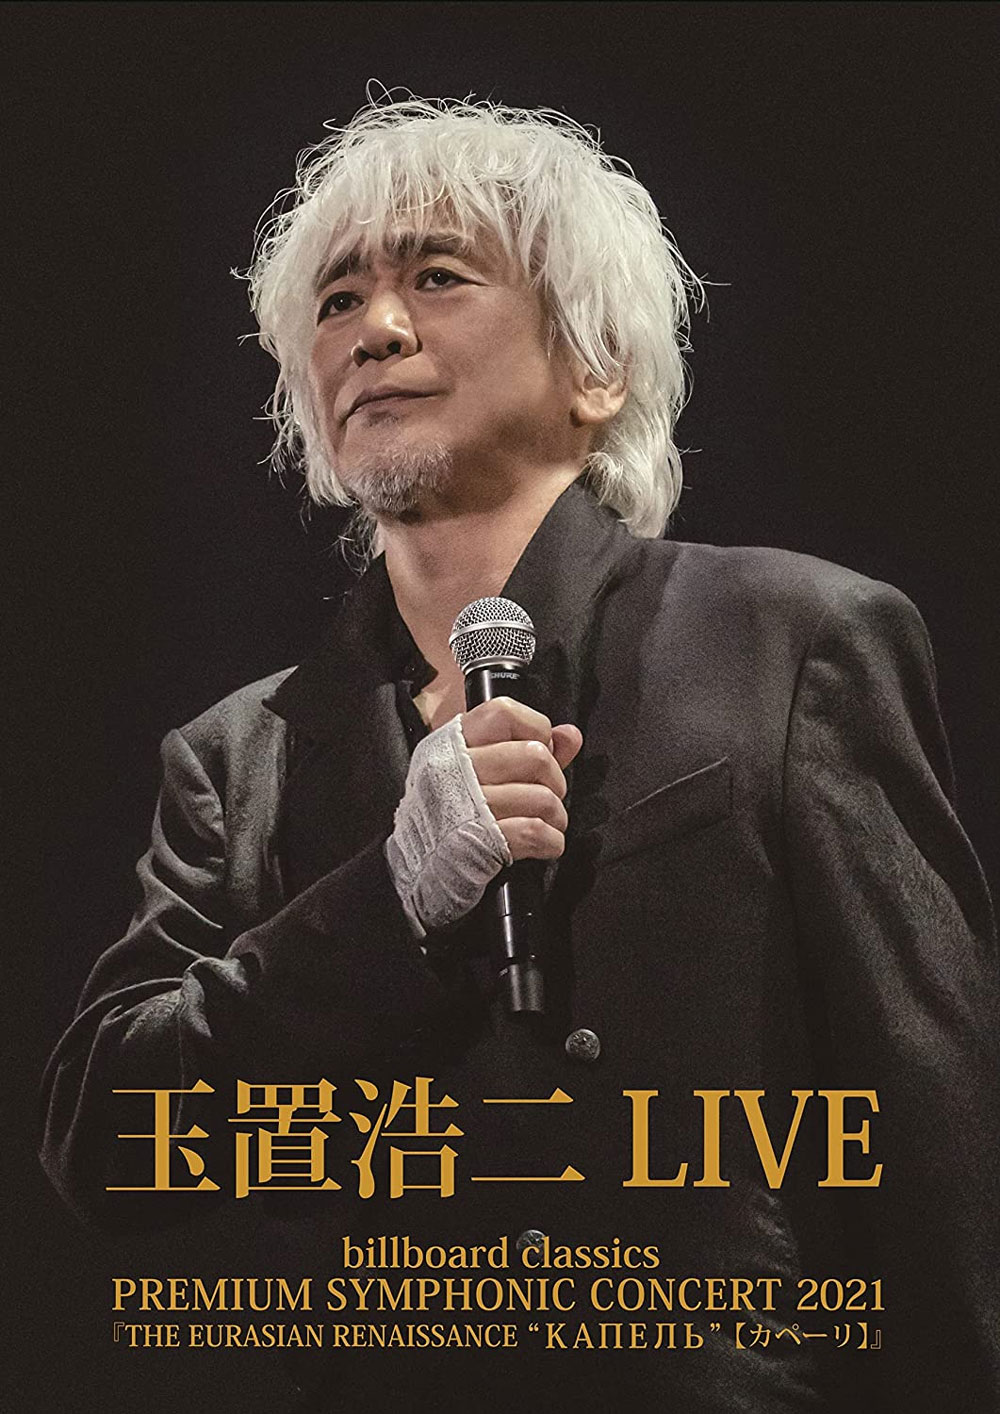 玉置浩二Koji Tamaki LIVE: billboard classics ~PREMIUM